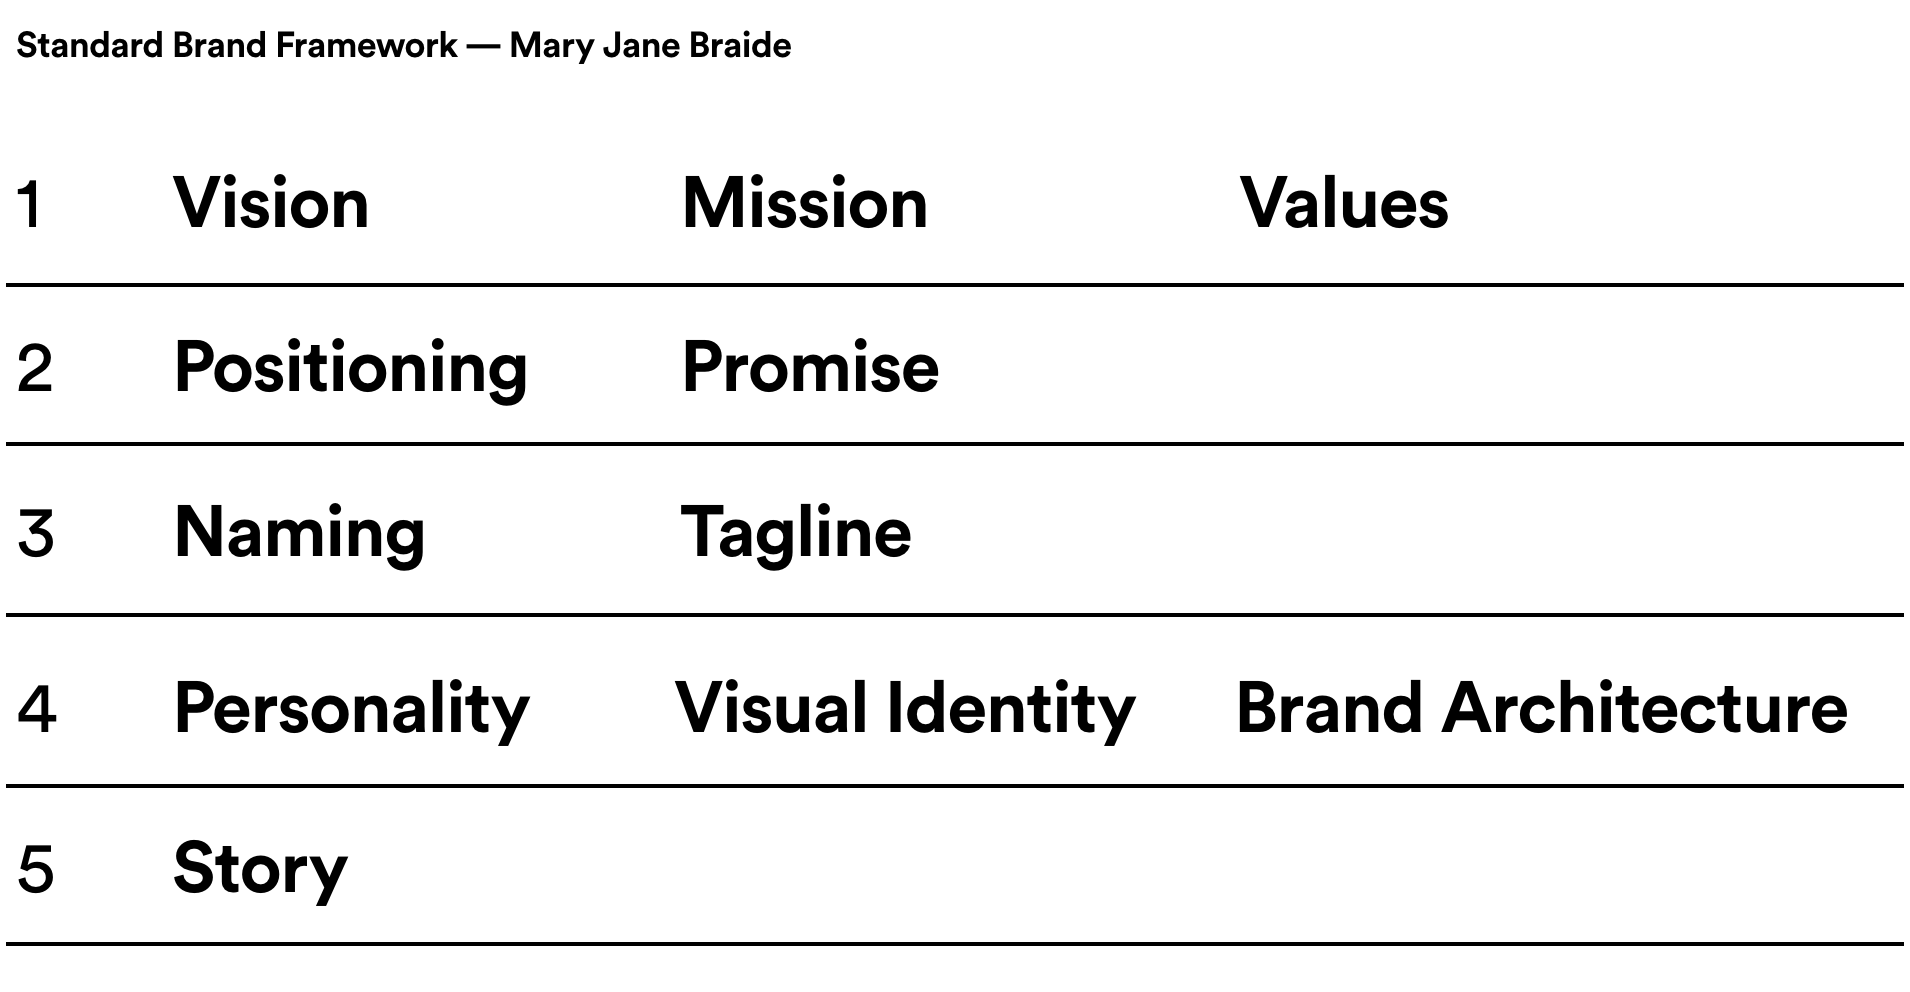 Standard Brand Framework